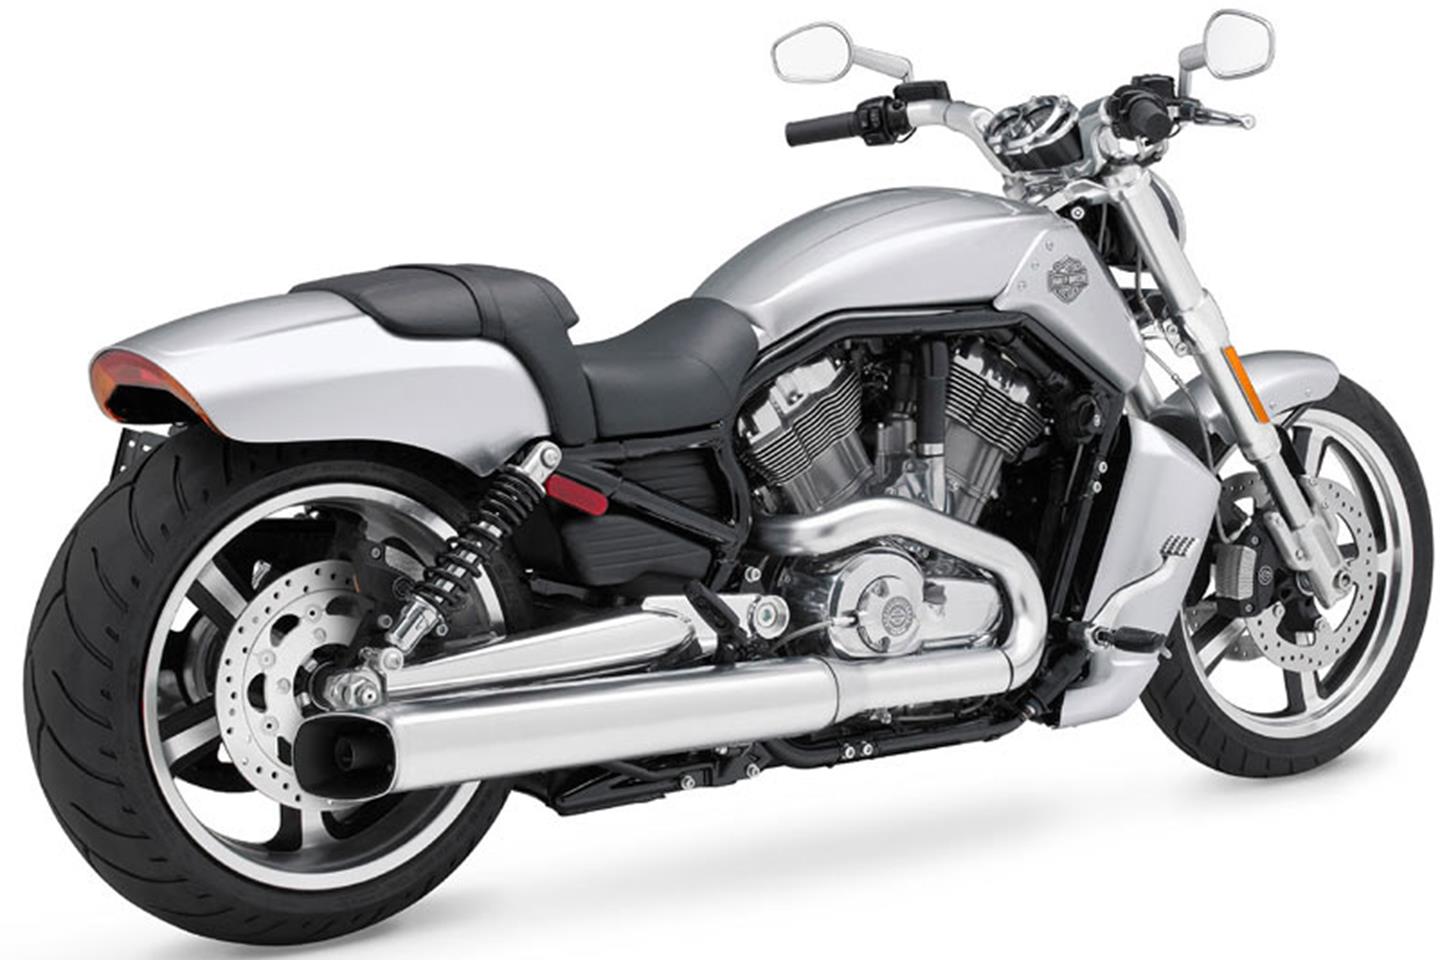 Harley-Davidson V-Rod (2009-2018) review